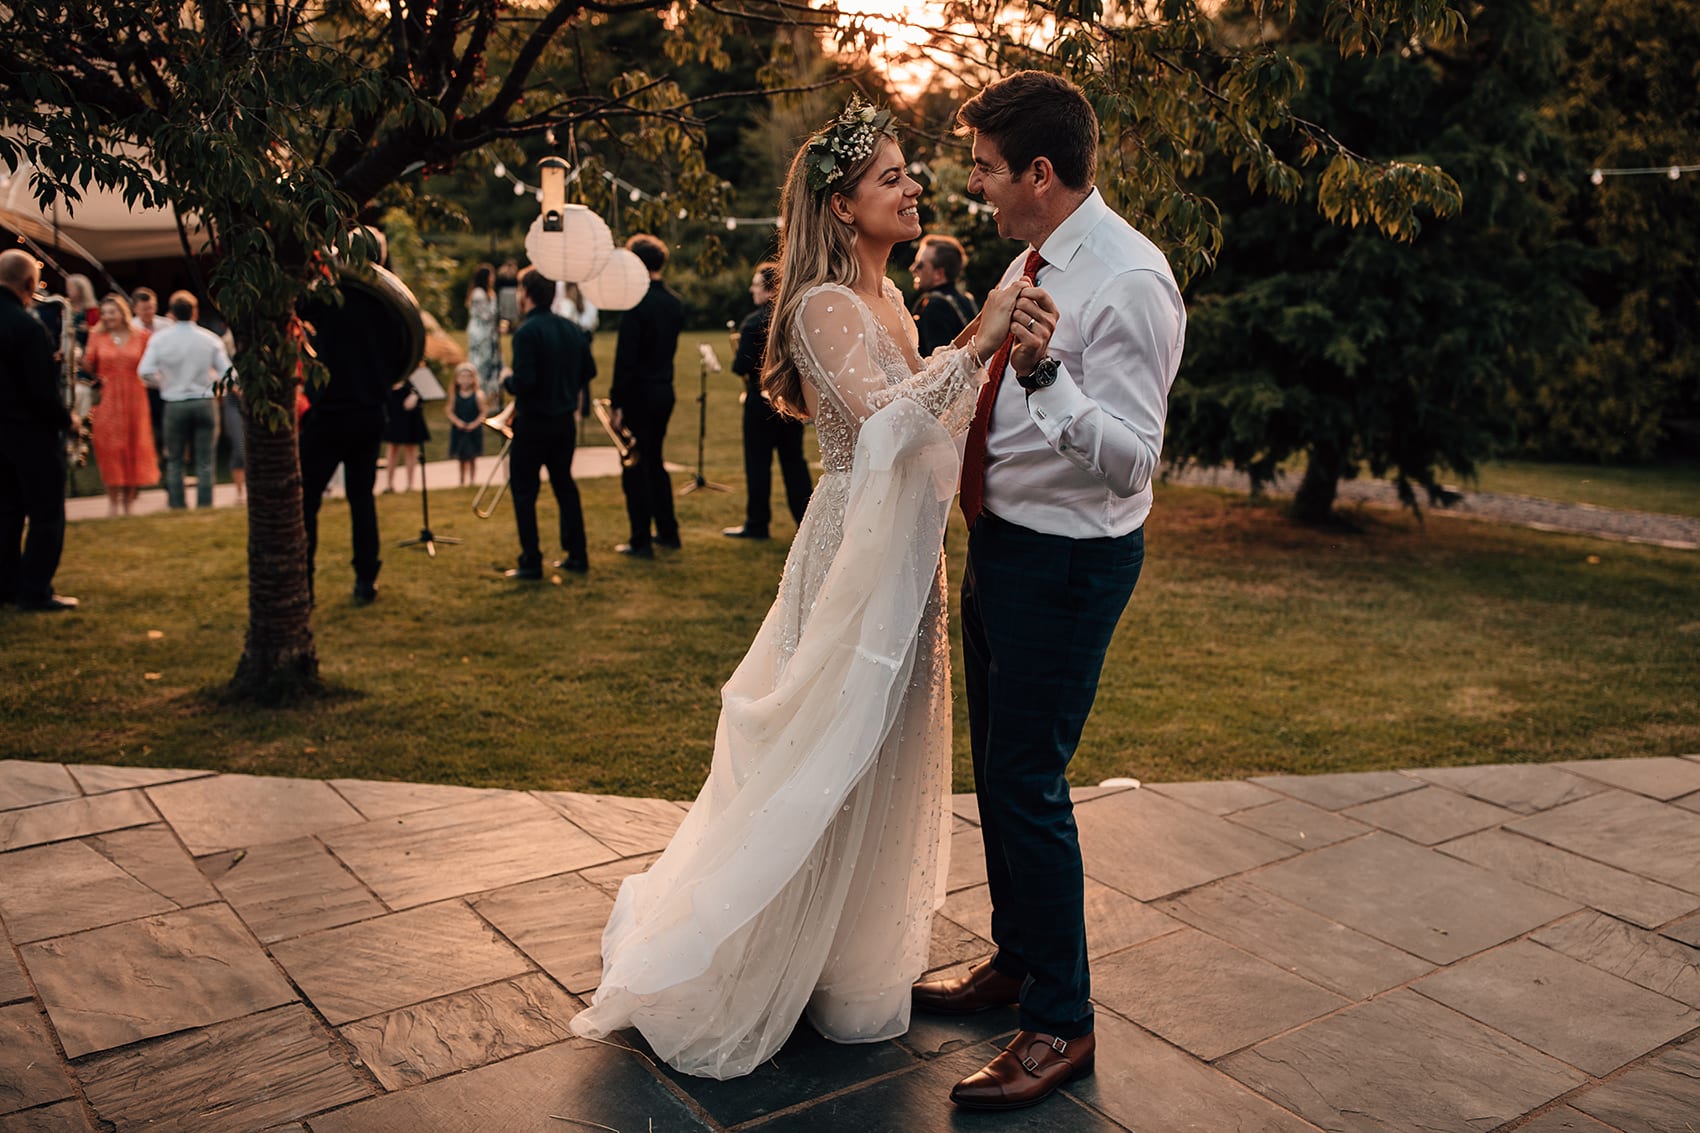 outdoors wedding dance-floor photography